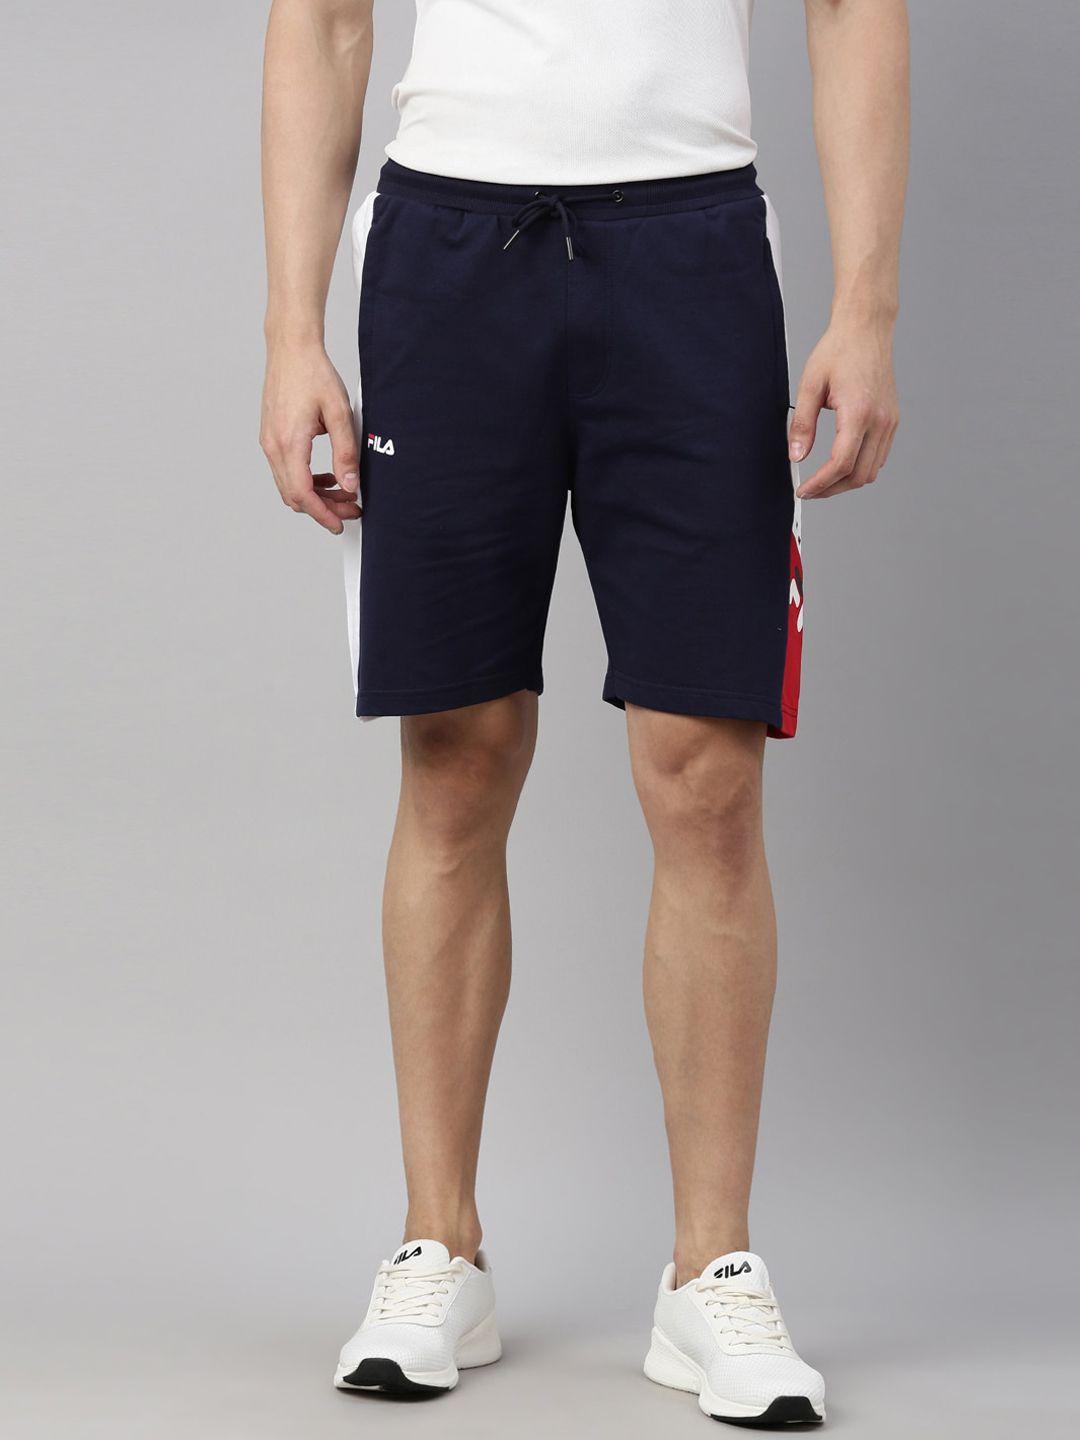 fila-men-navy-blue-solid-training-or-gym-cotton-sports-shorts